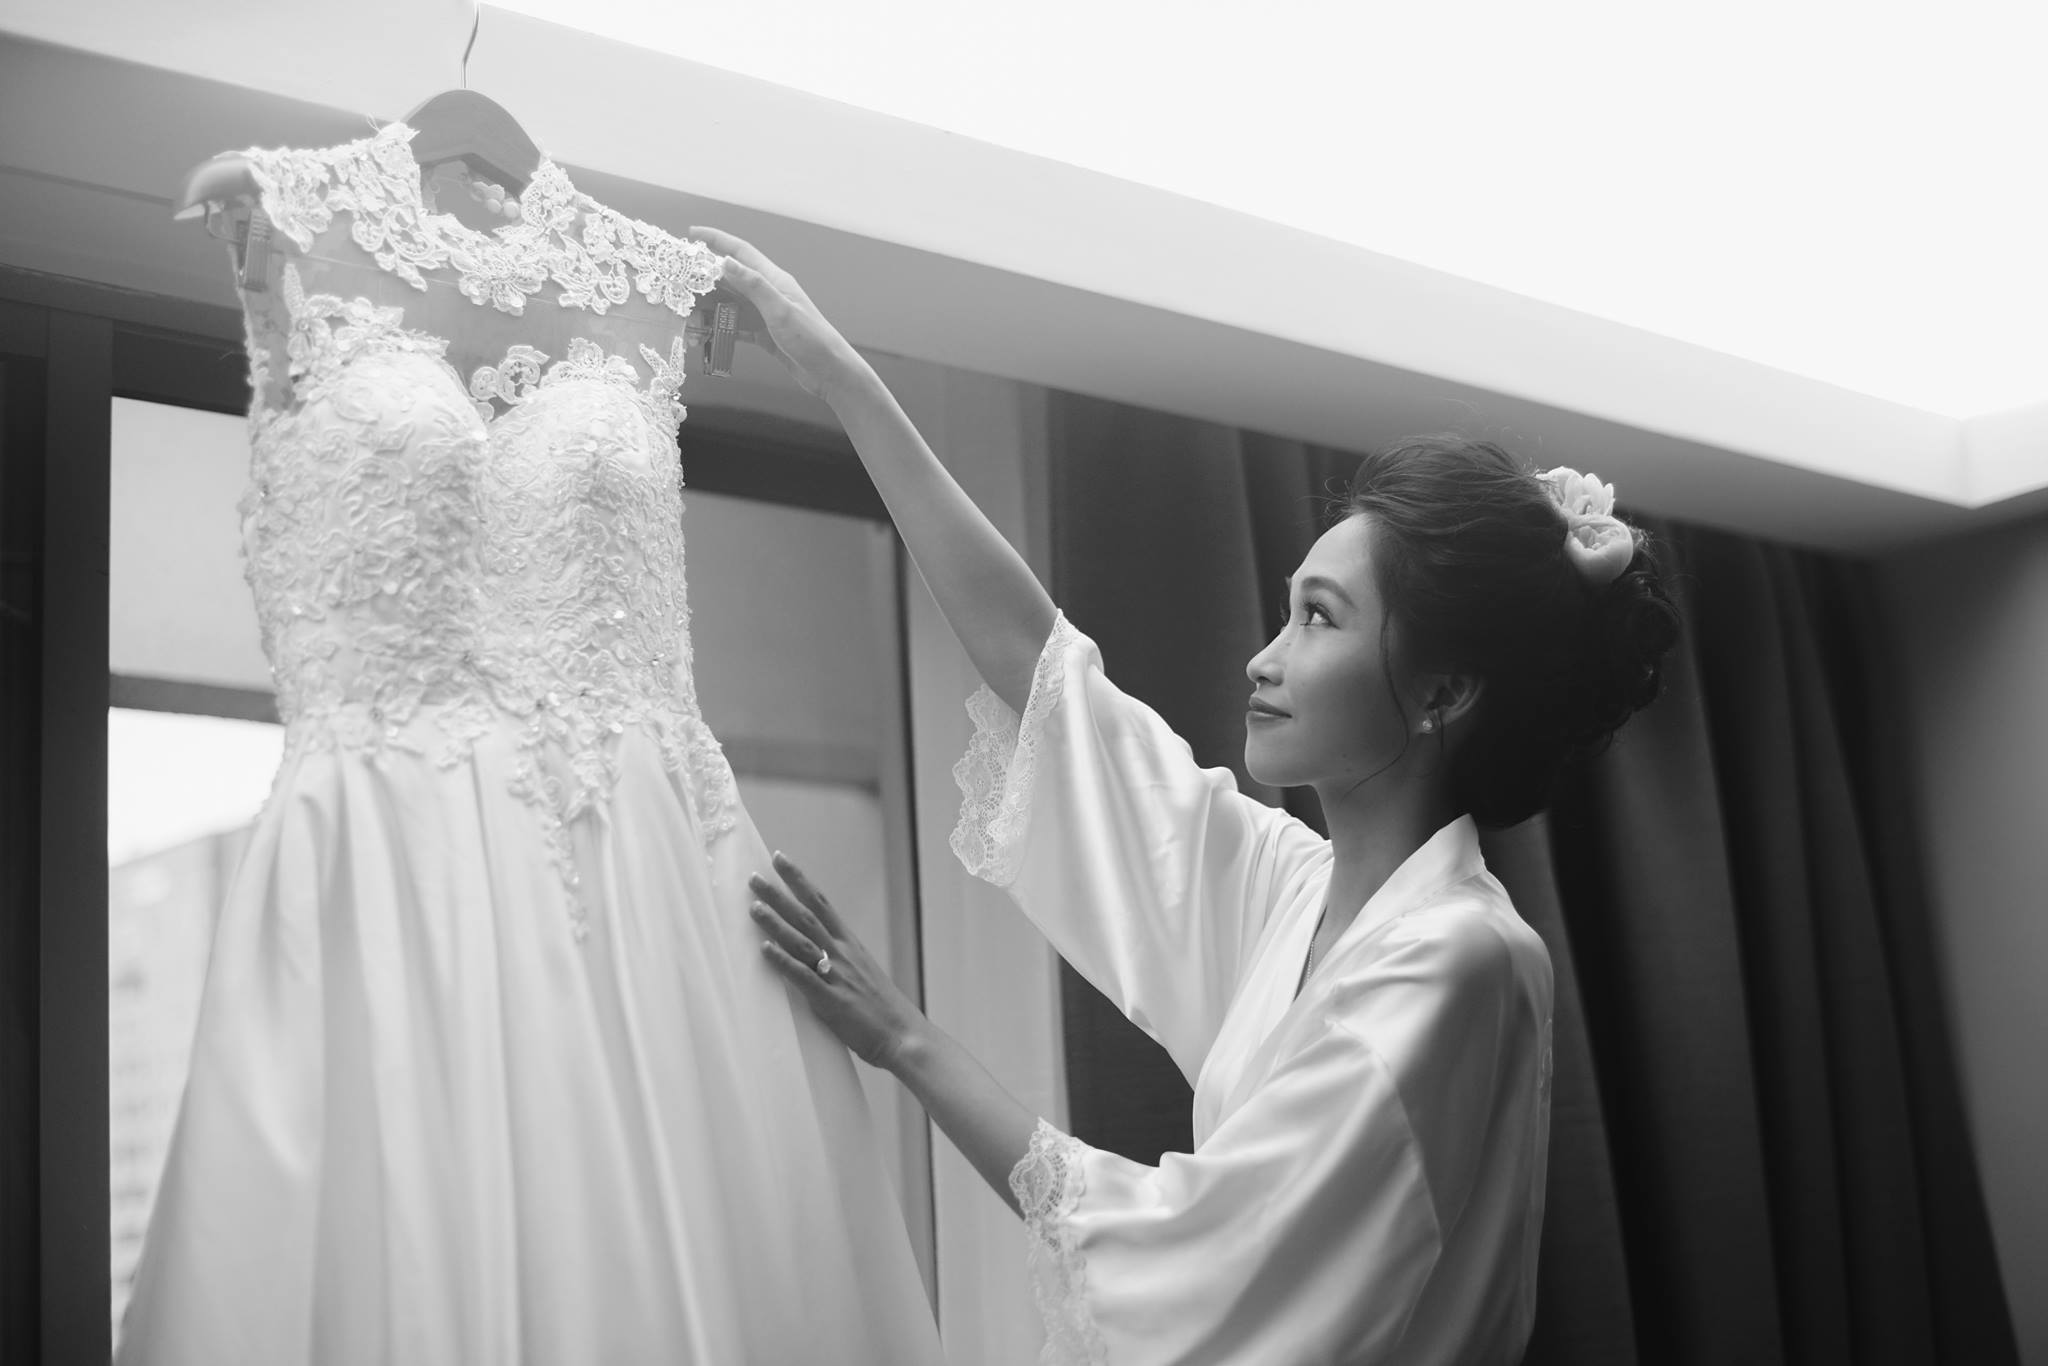 Thuy Anh + Anthony Wu | wedding day